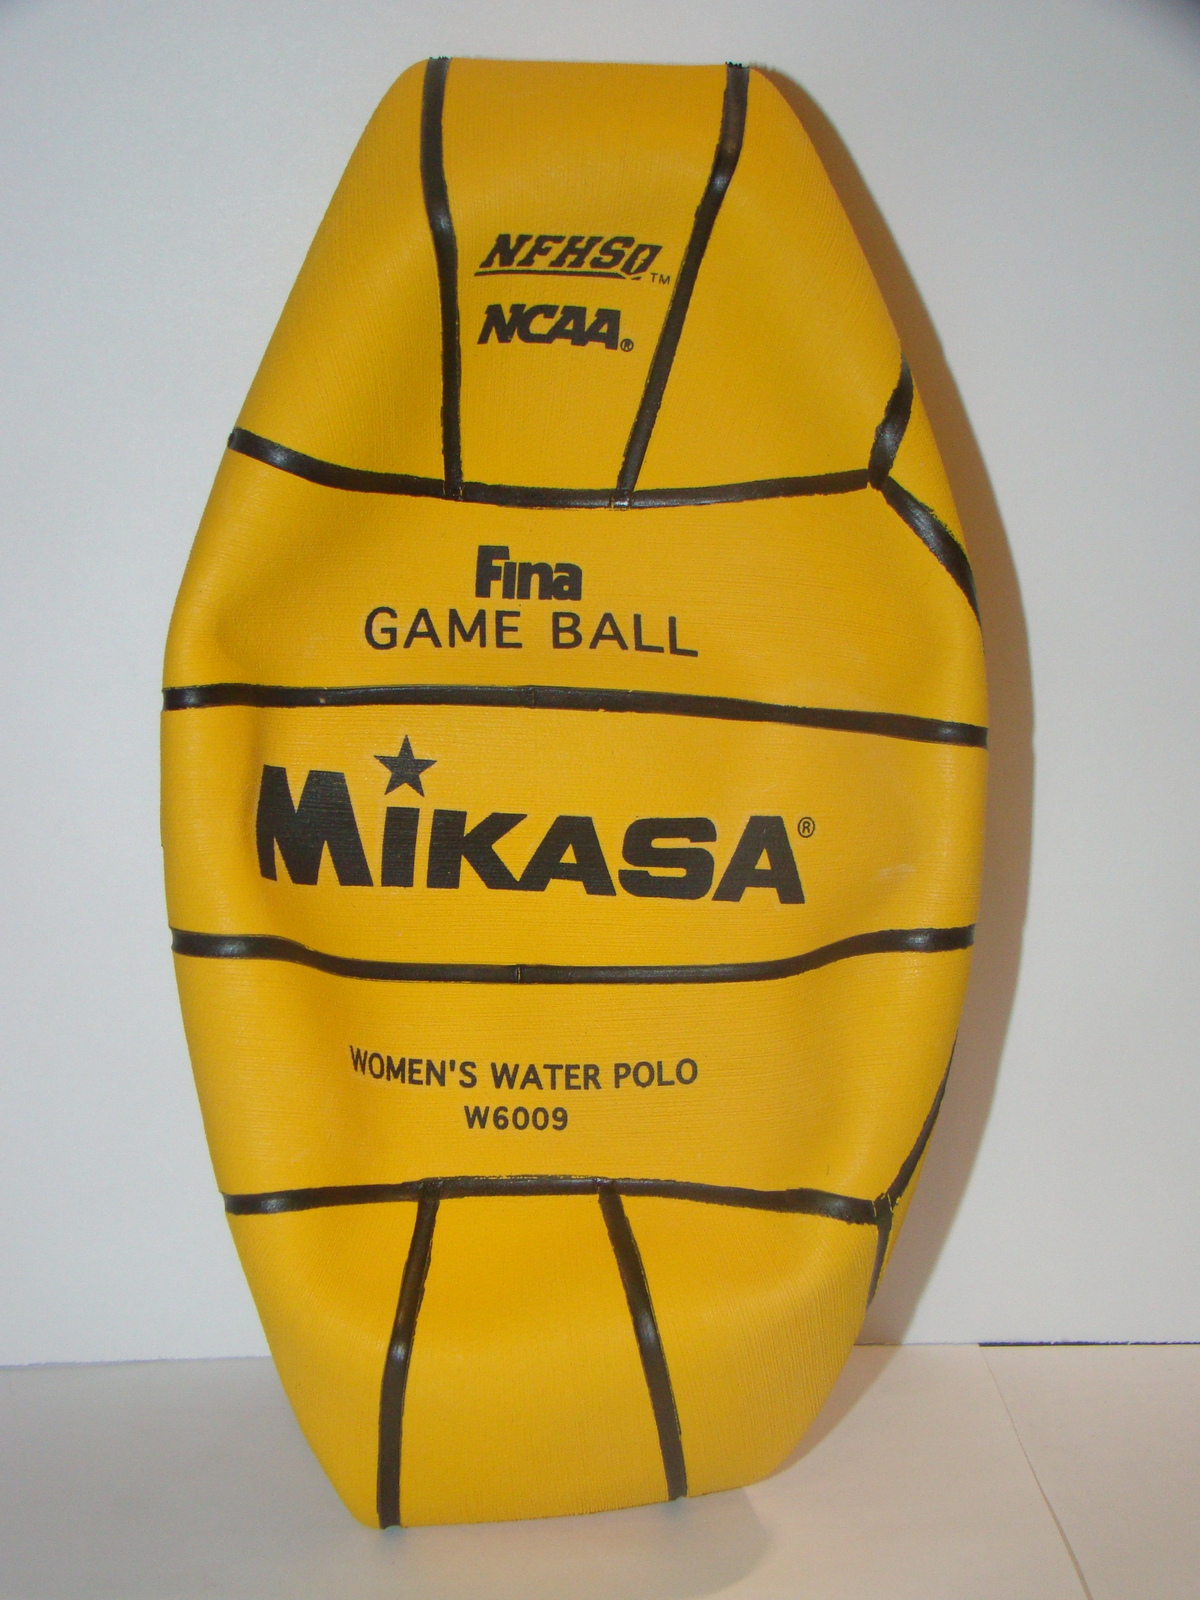 MIKASA - NCAA Women's Water Polo (W6009) FINA GAME BALL - $50.00